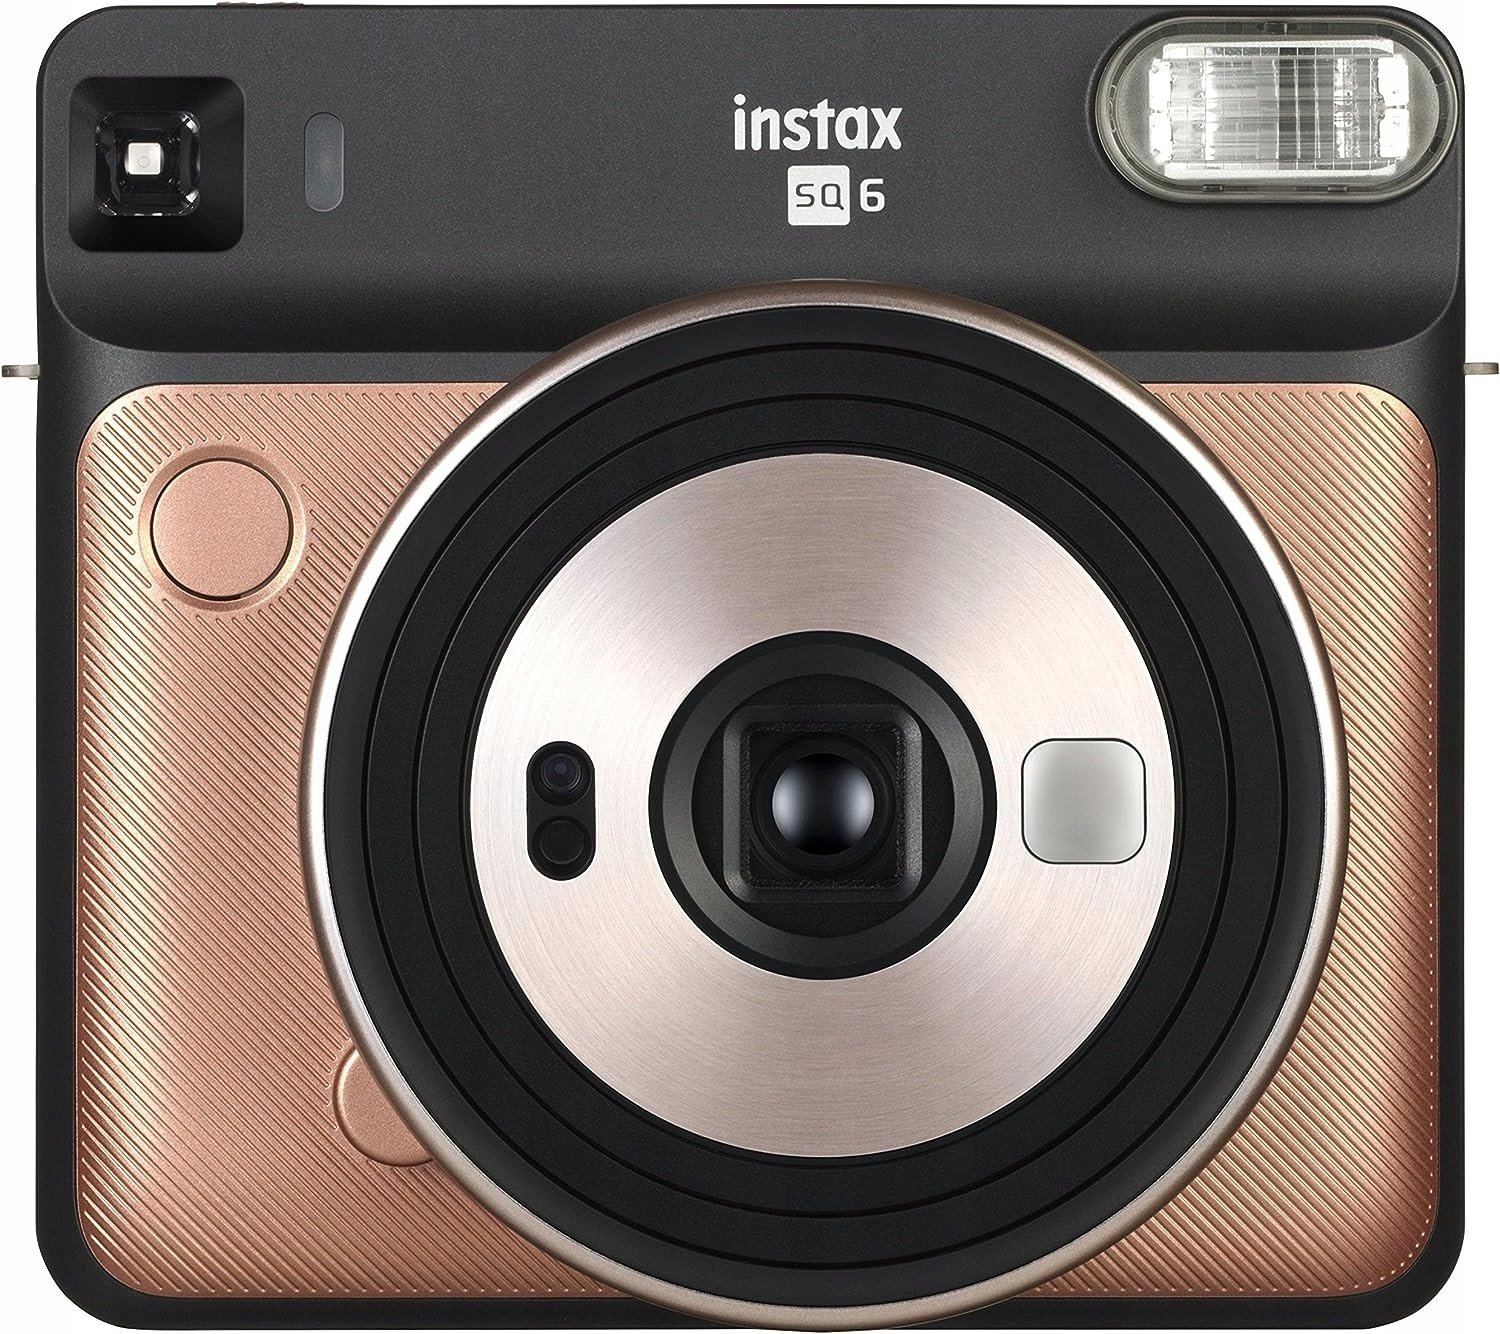 Instantní fotoaparát Fujifilm Instax Sq 6 zlatý Makro/Selfie 6,2 x 6,2cm